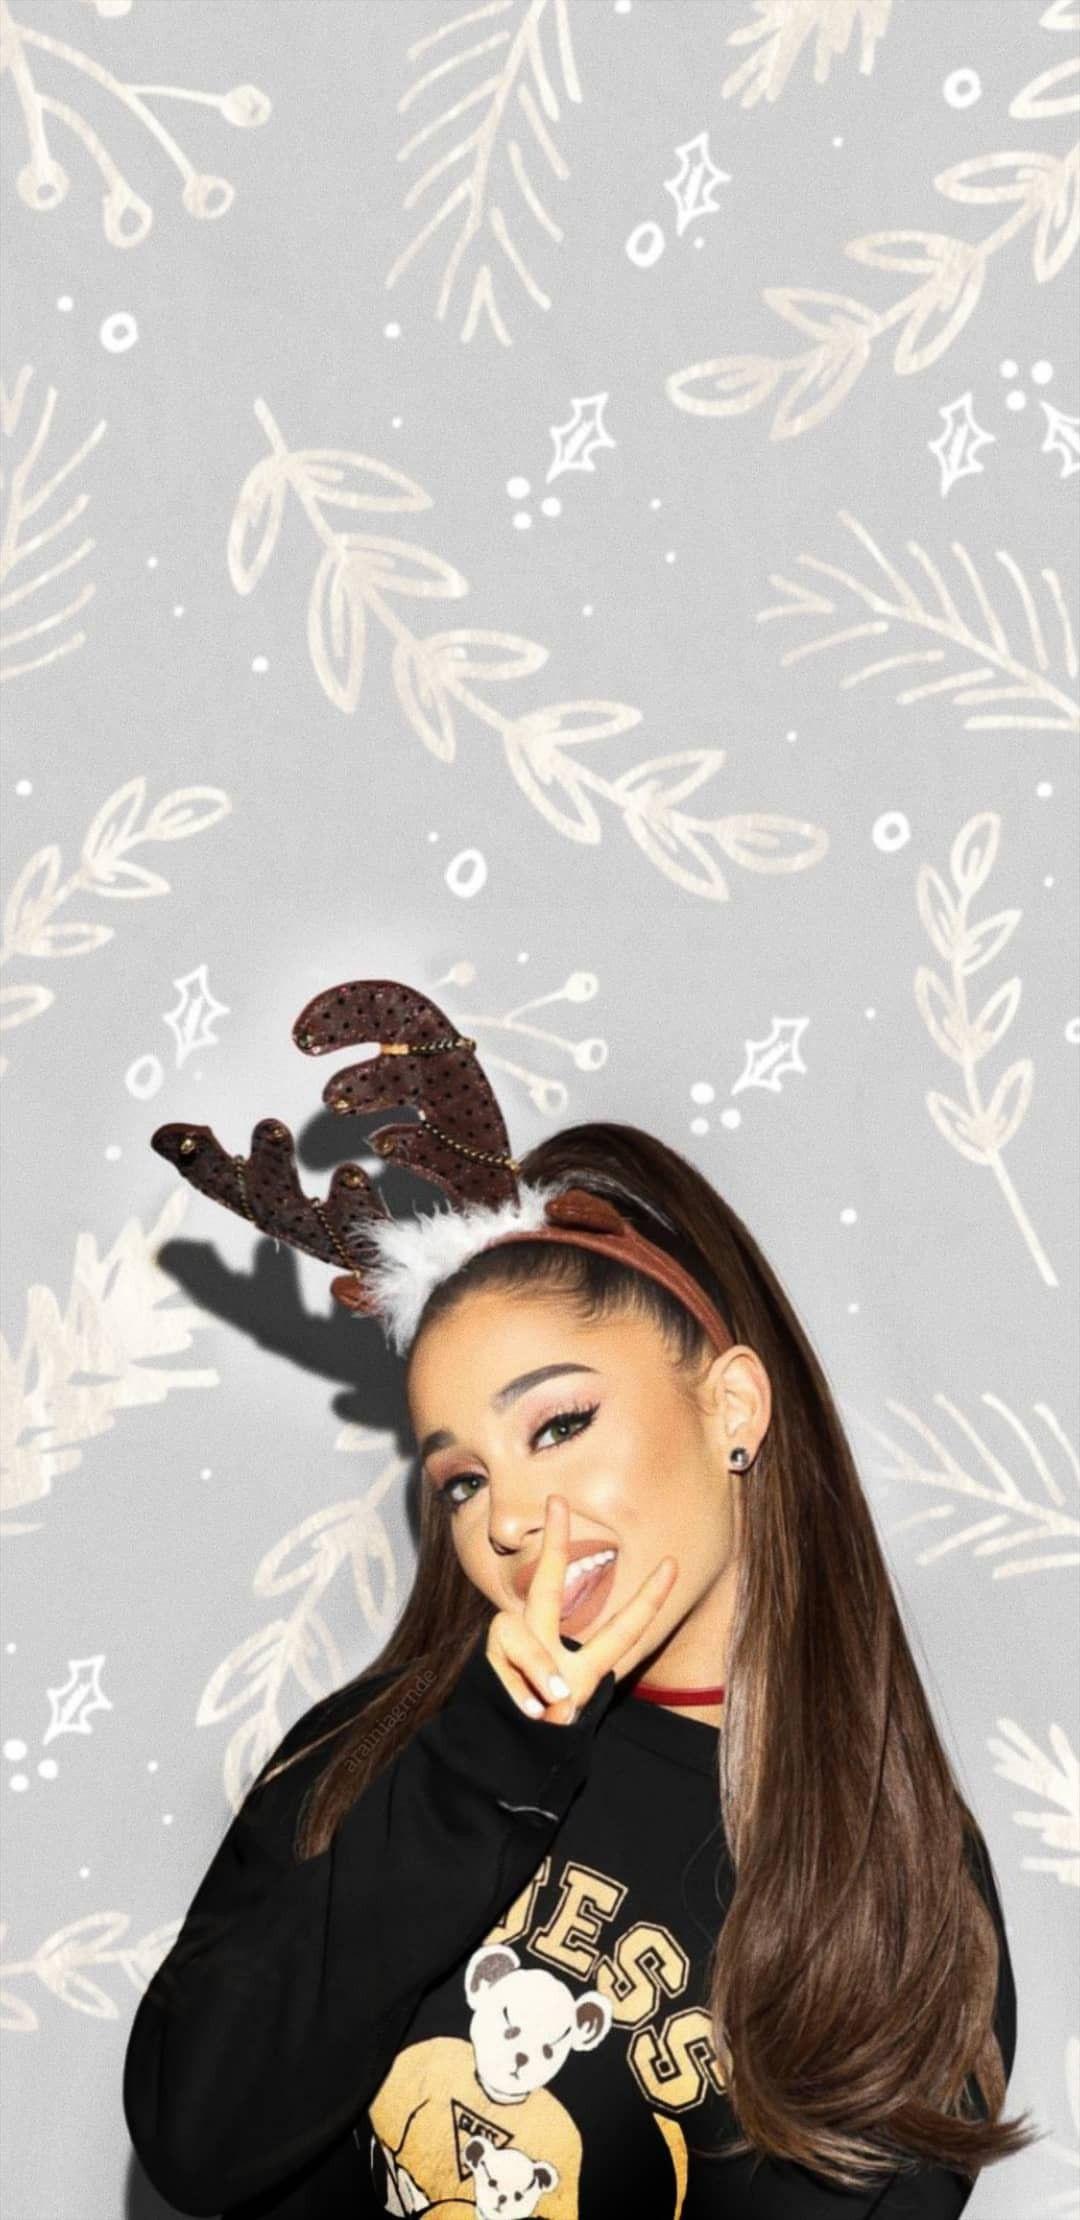 ariana christmas wallpaper. Ariana grande, Ariana